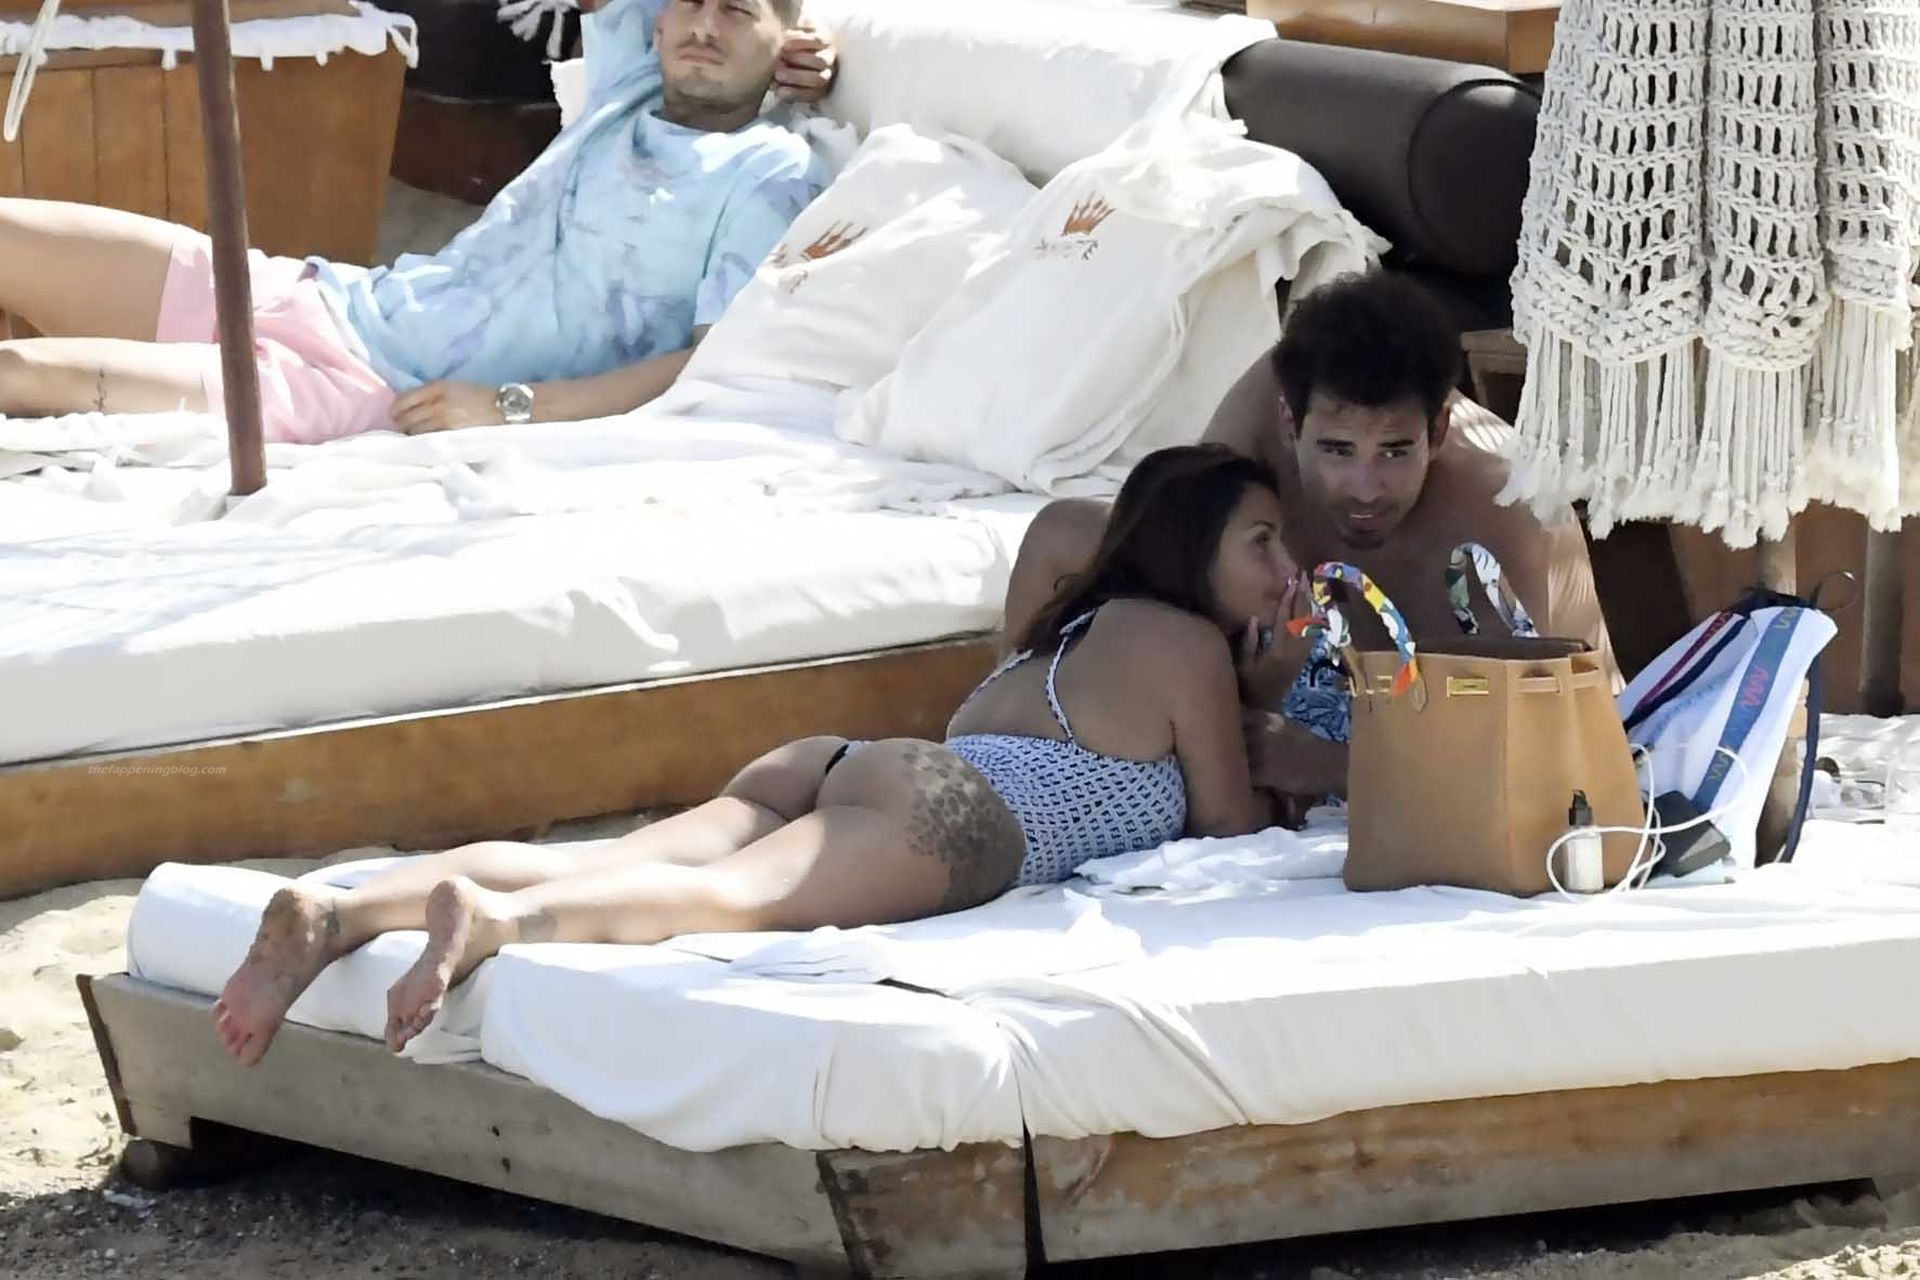 Elettra Lamborghini  DJ Afrojack Enjoy a Romantic Moment at the Beach (62 Photos)